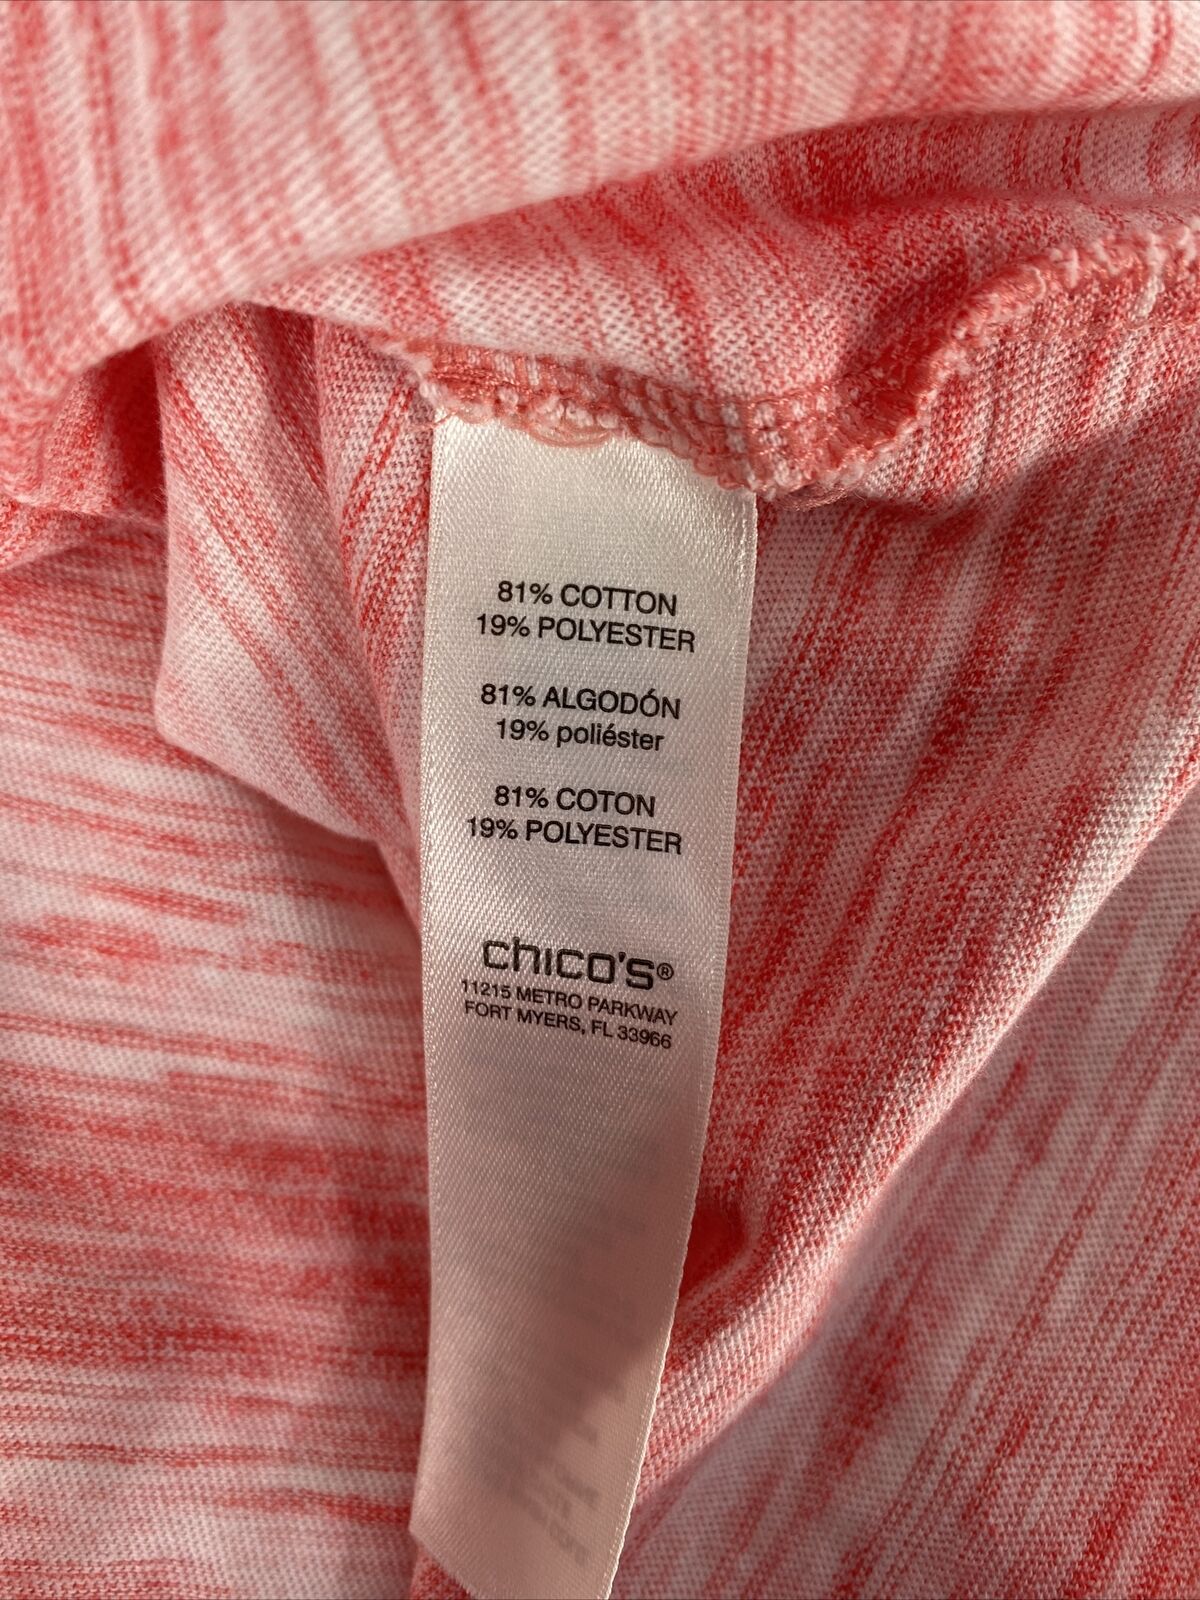 Chico's Women's Pink Short Sleeve Basic Tee T-Shirt 2/US L